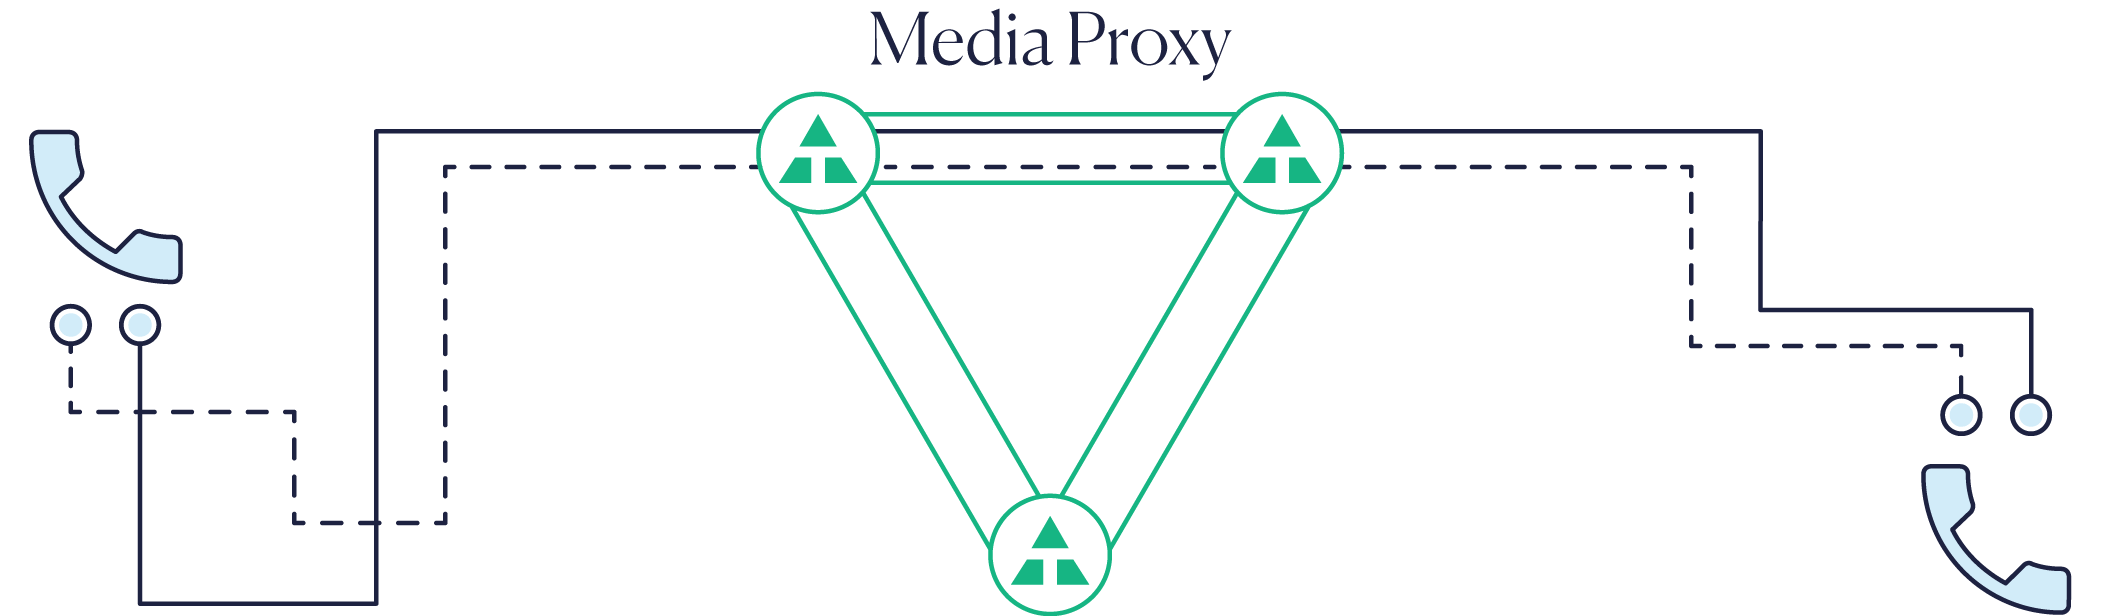 Media proxy banner graphic
